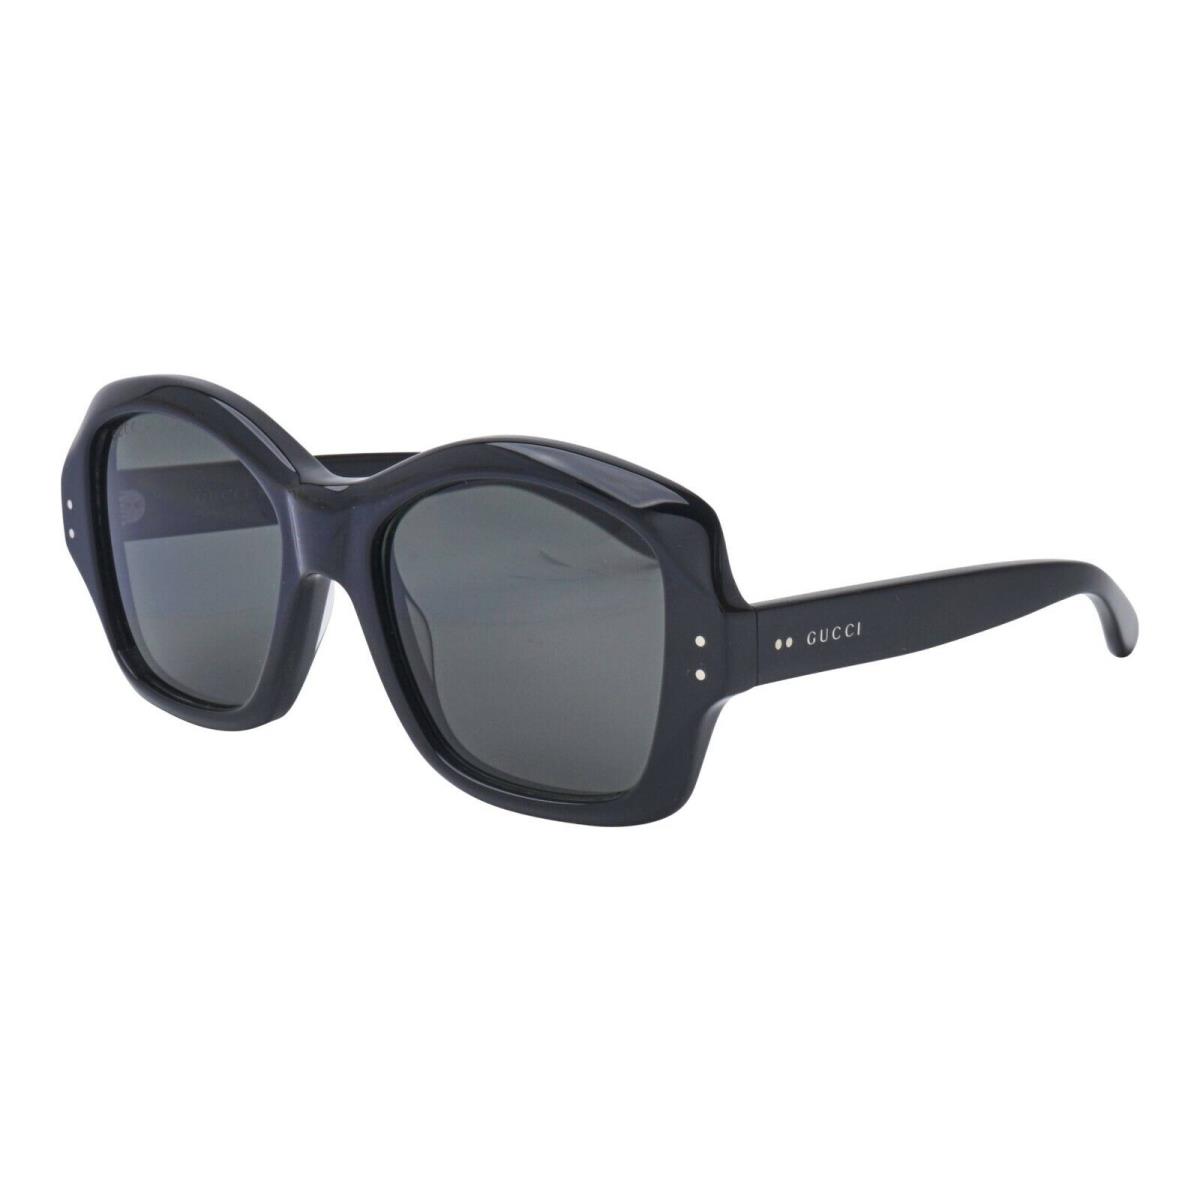 Gucci Sunglasses GG0624S 001 Black/grey Lens Design 57mm